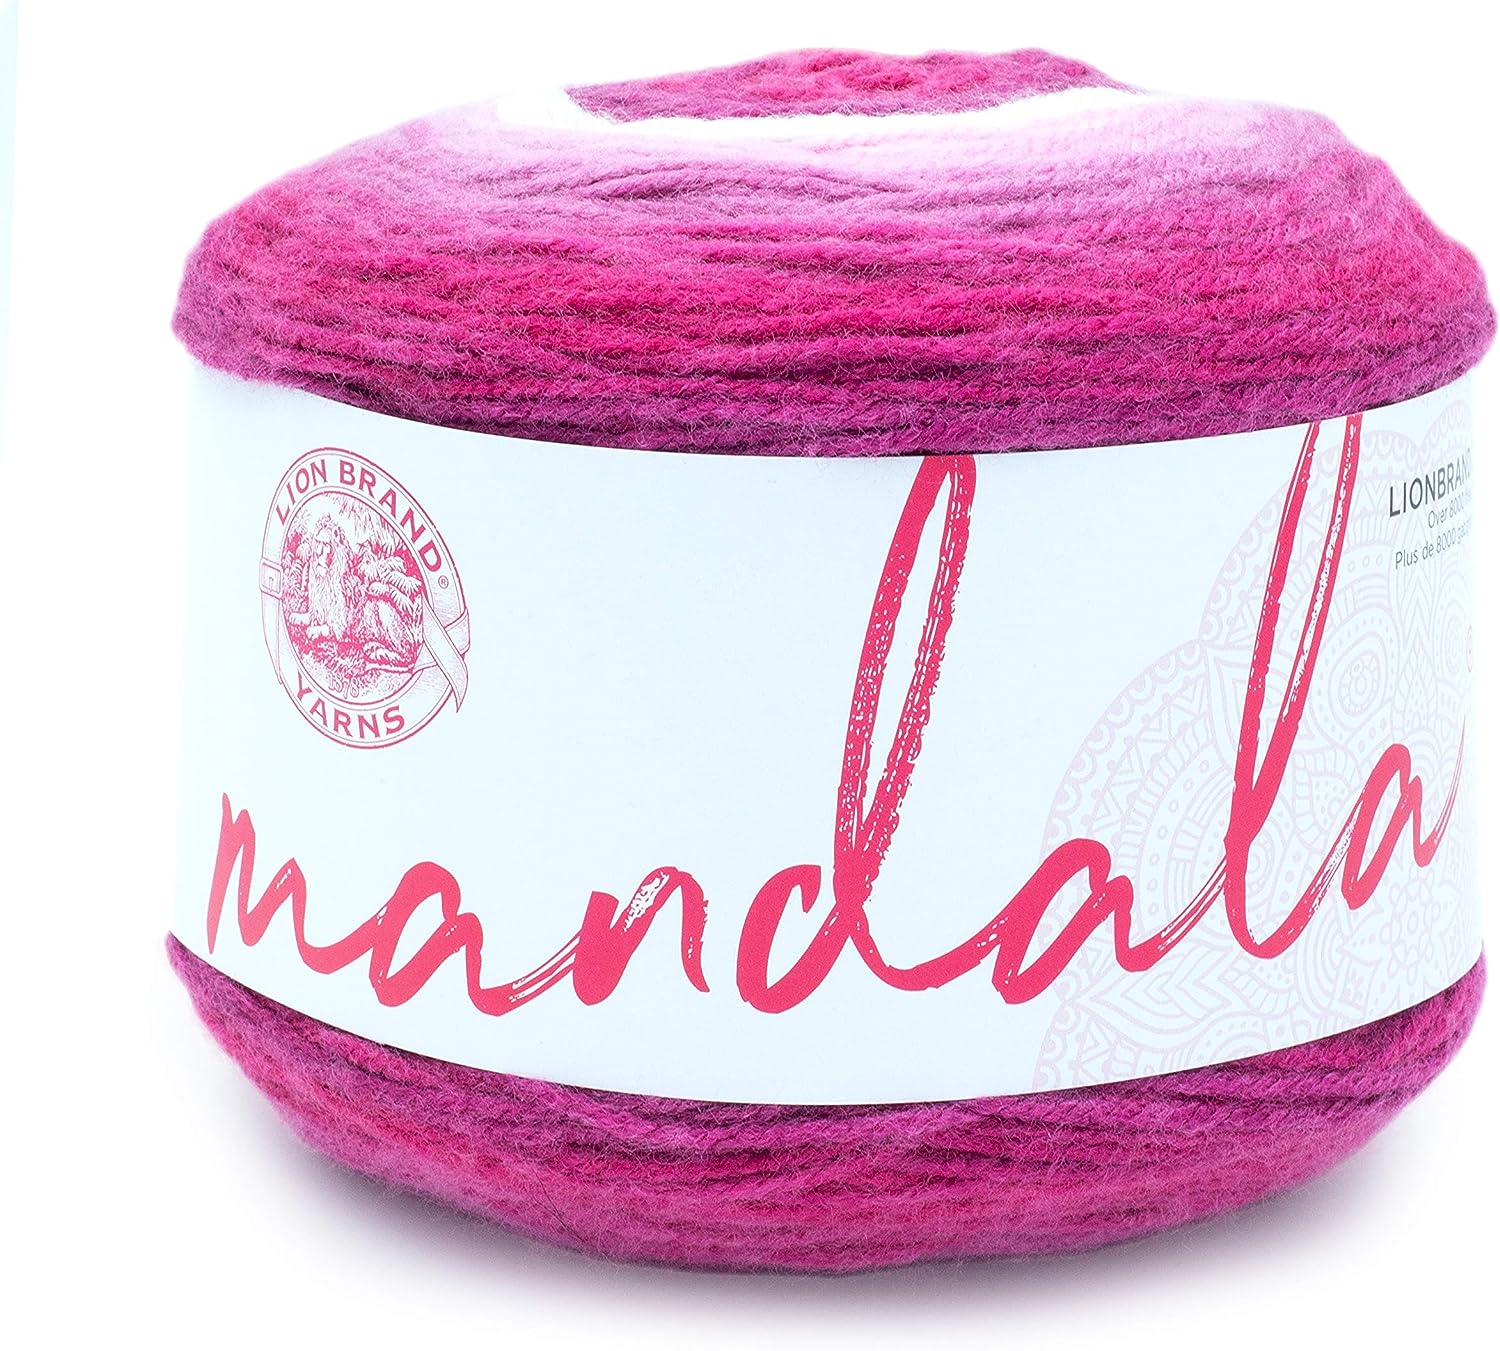 Lion Brand Yarn Mandala Yarn, Multicolor Yarn for Crocheting and Knitting, Craft Yarn, 1-Pack, Cupid $5.07 Amazon